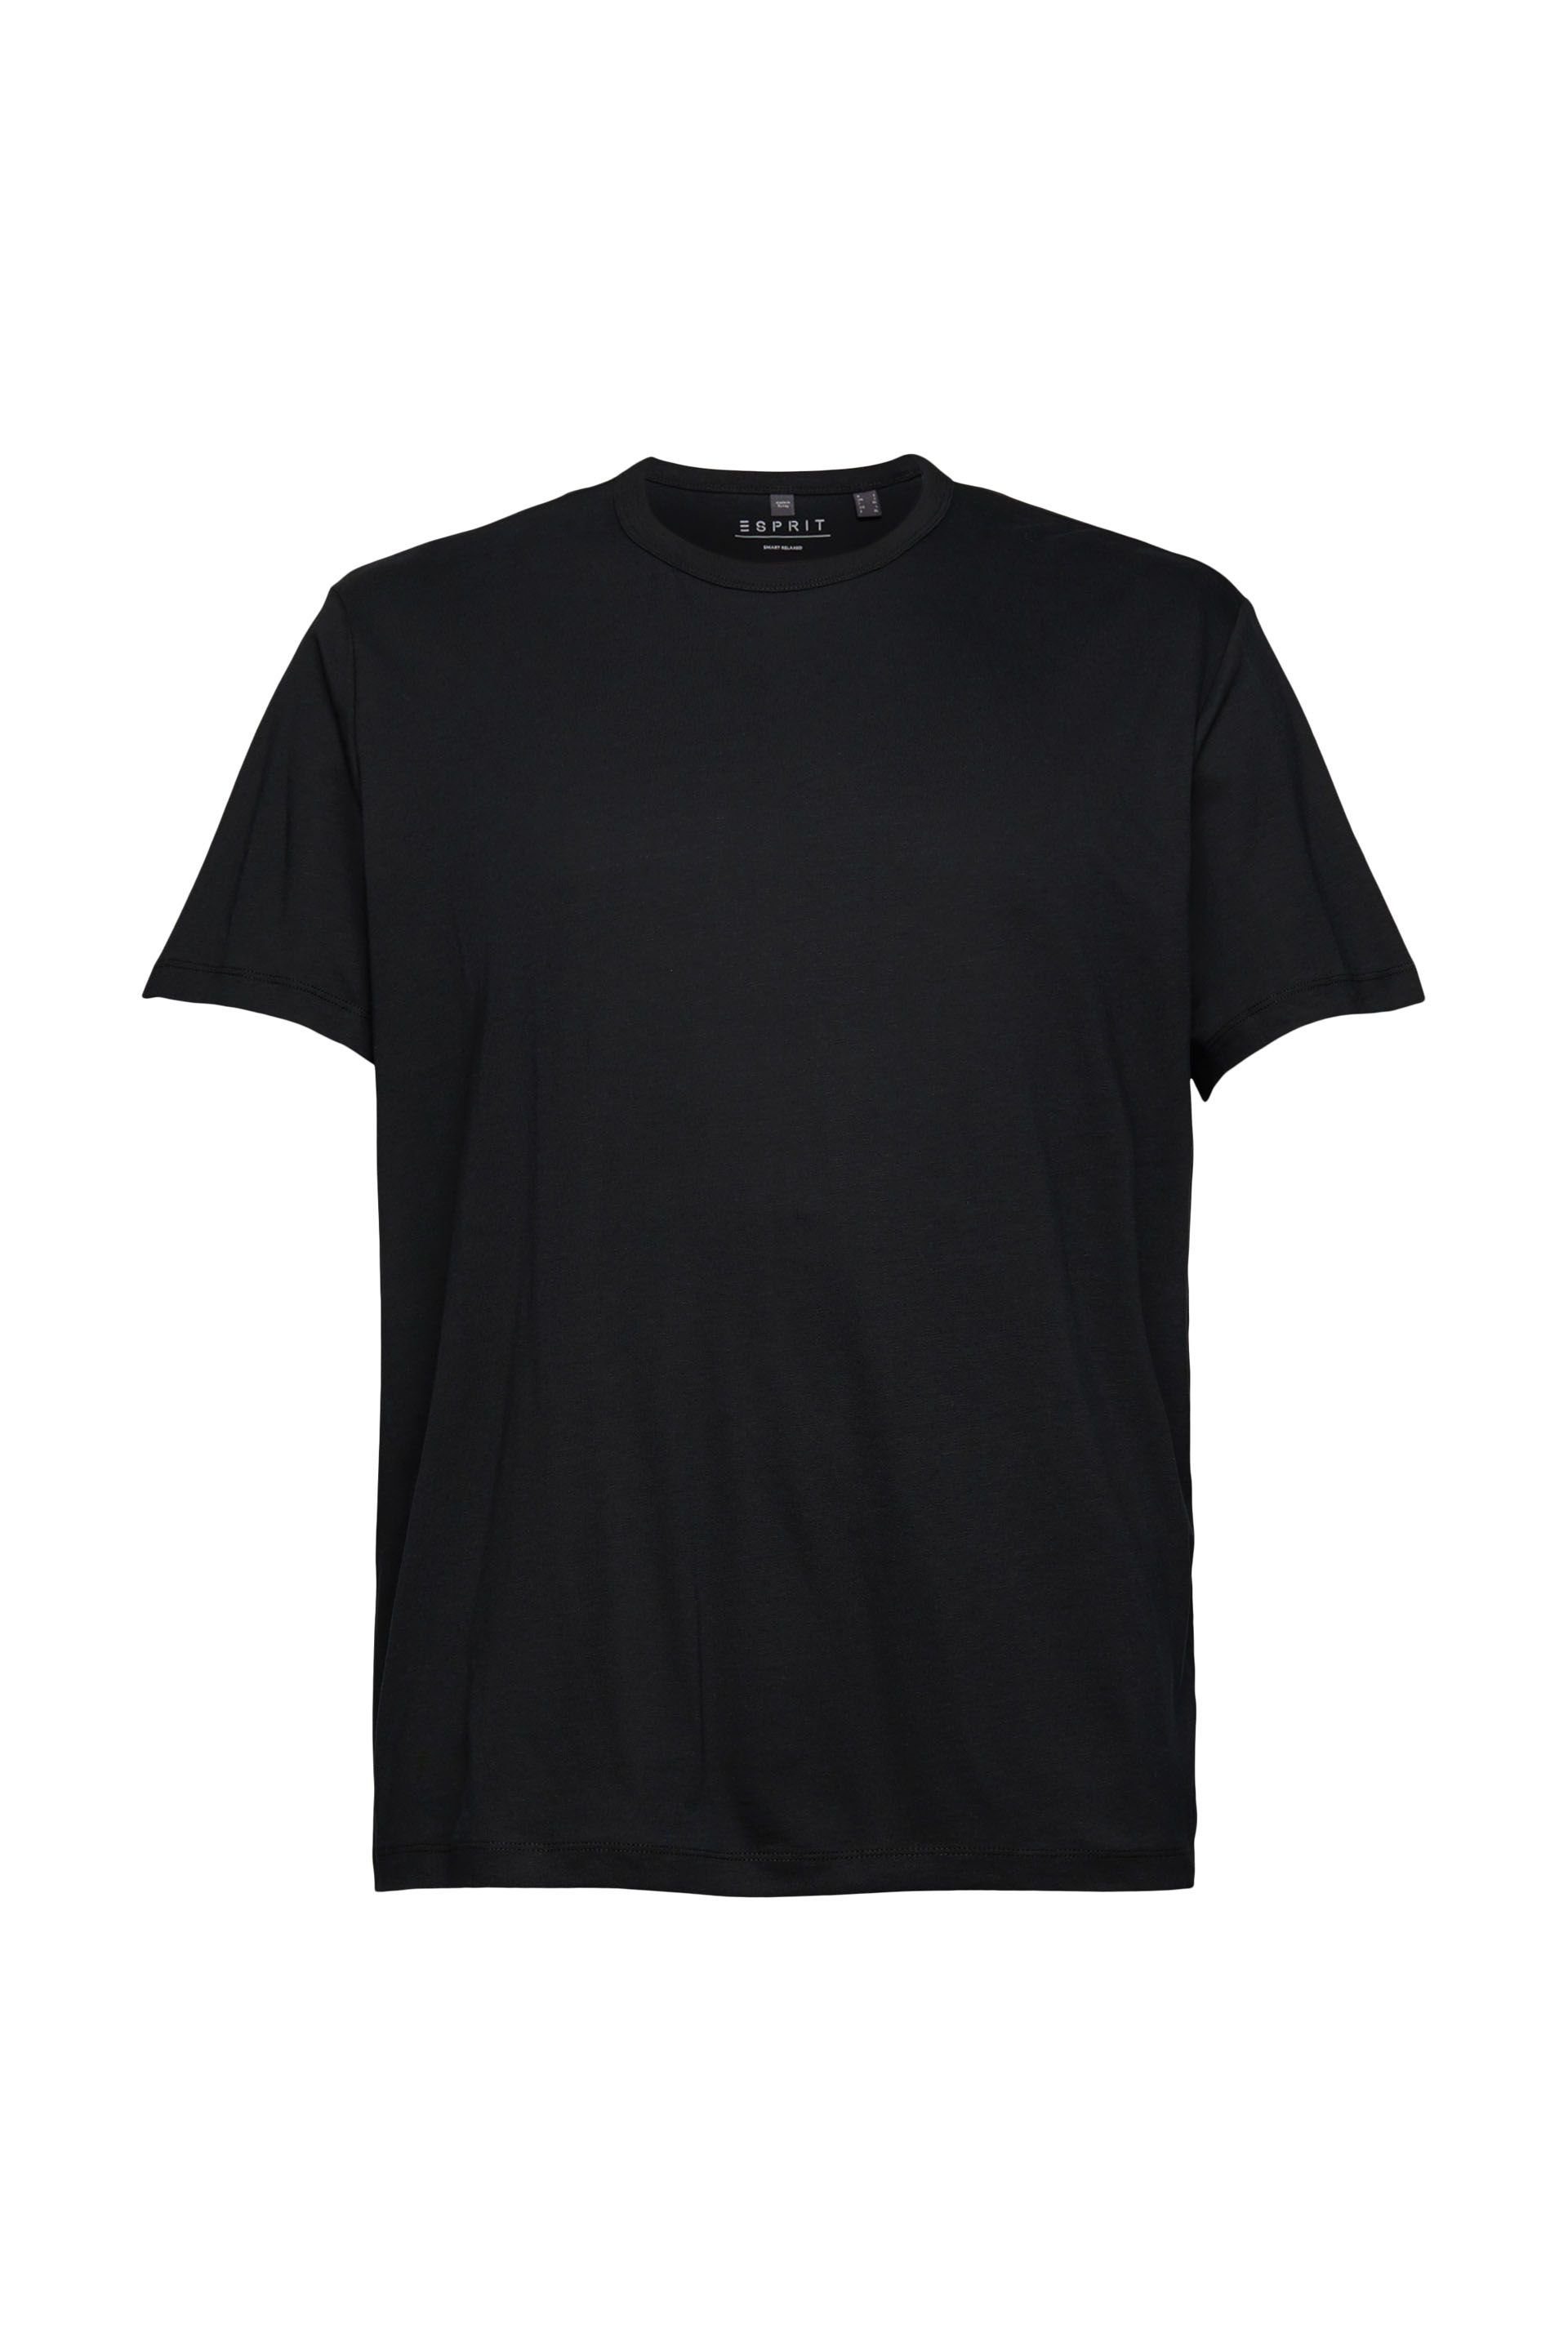 Esprit T-Shirt black | T-Shirts